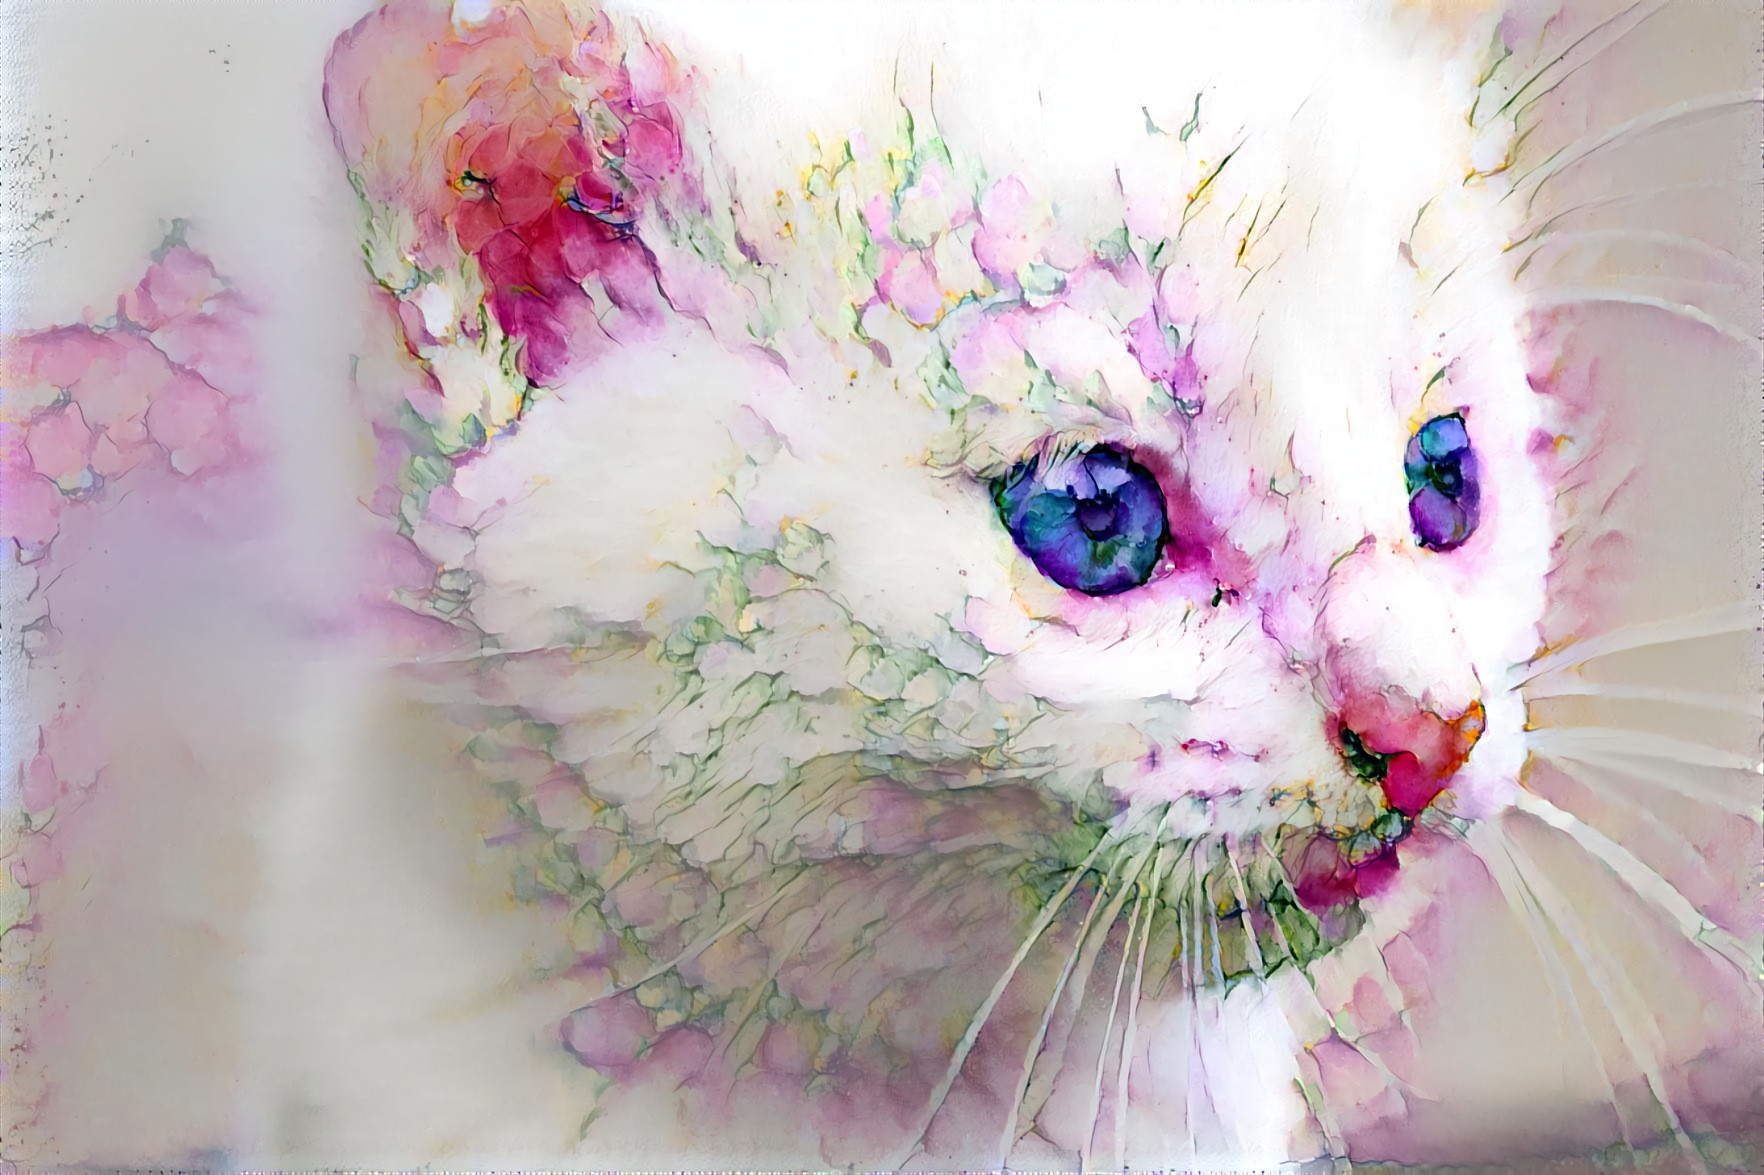 Watercolor Kitty